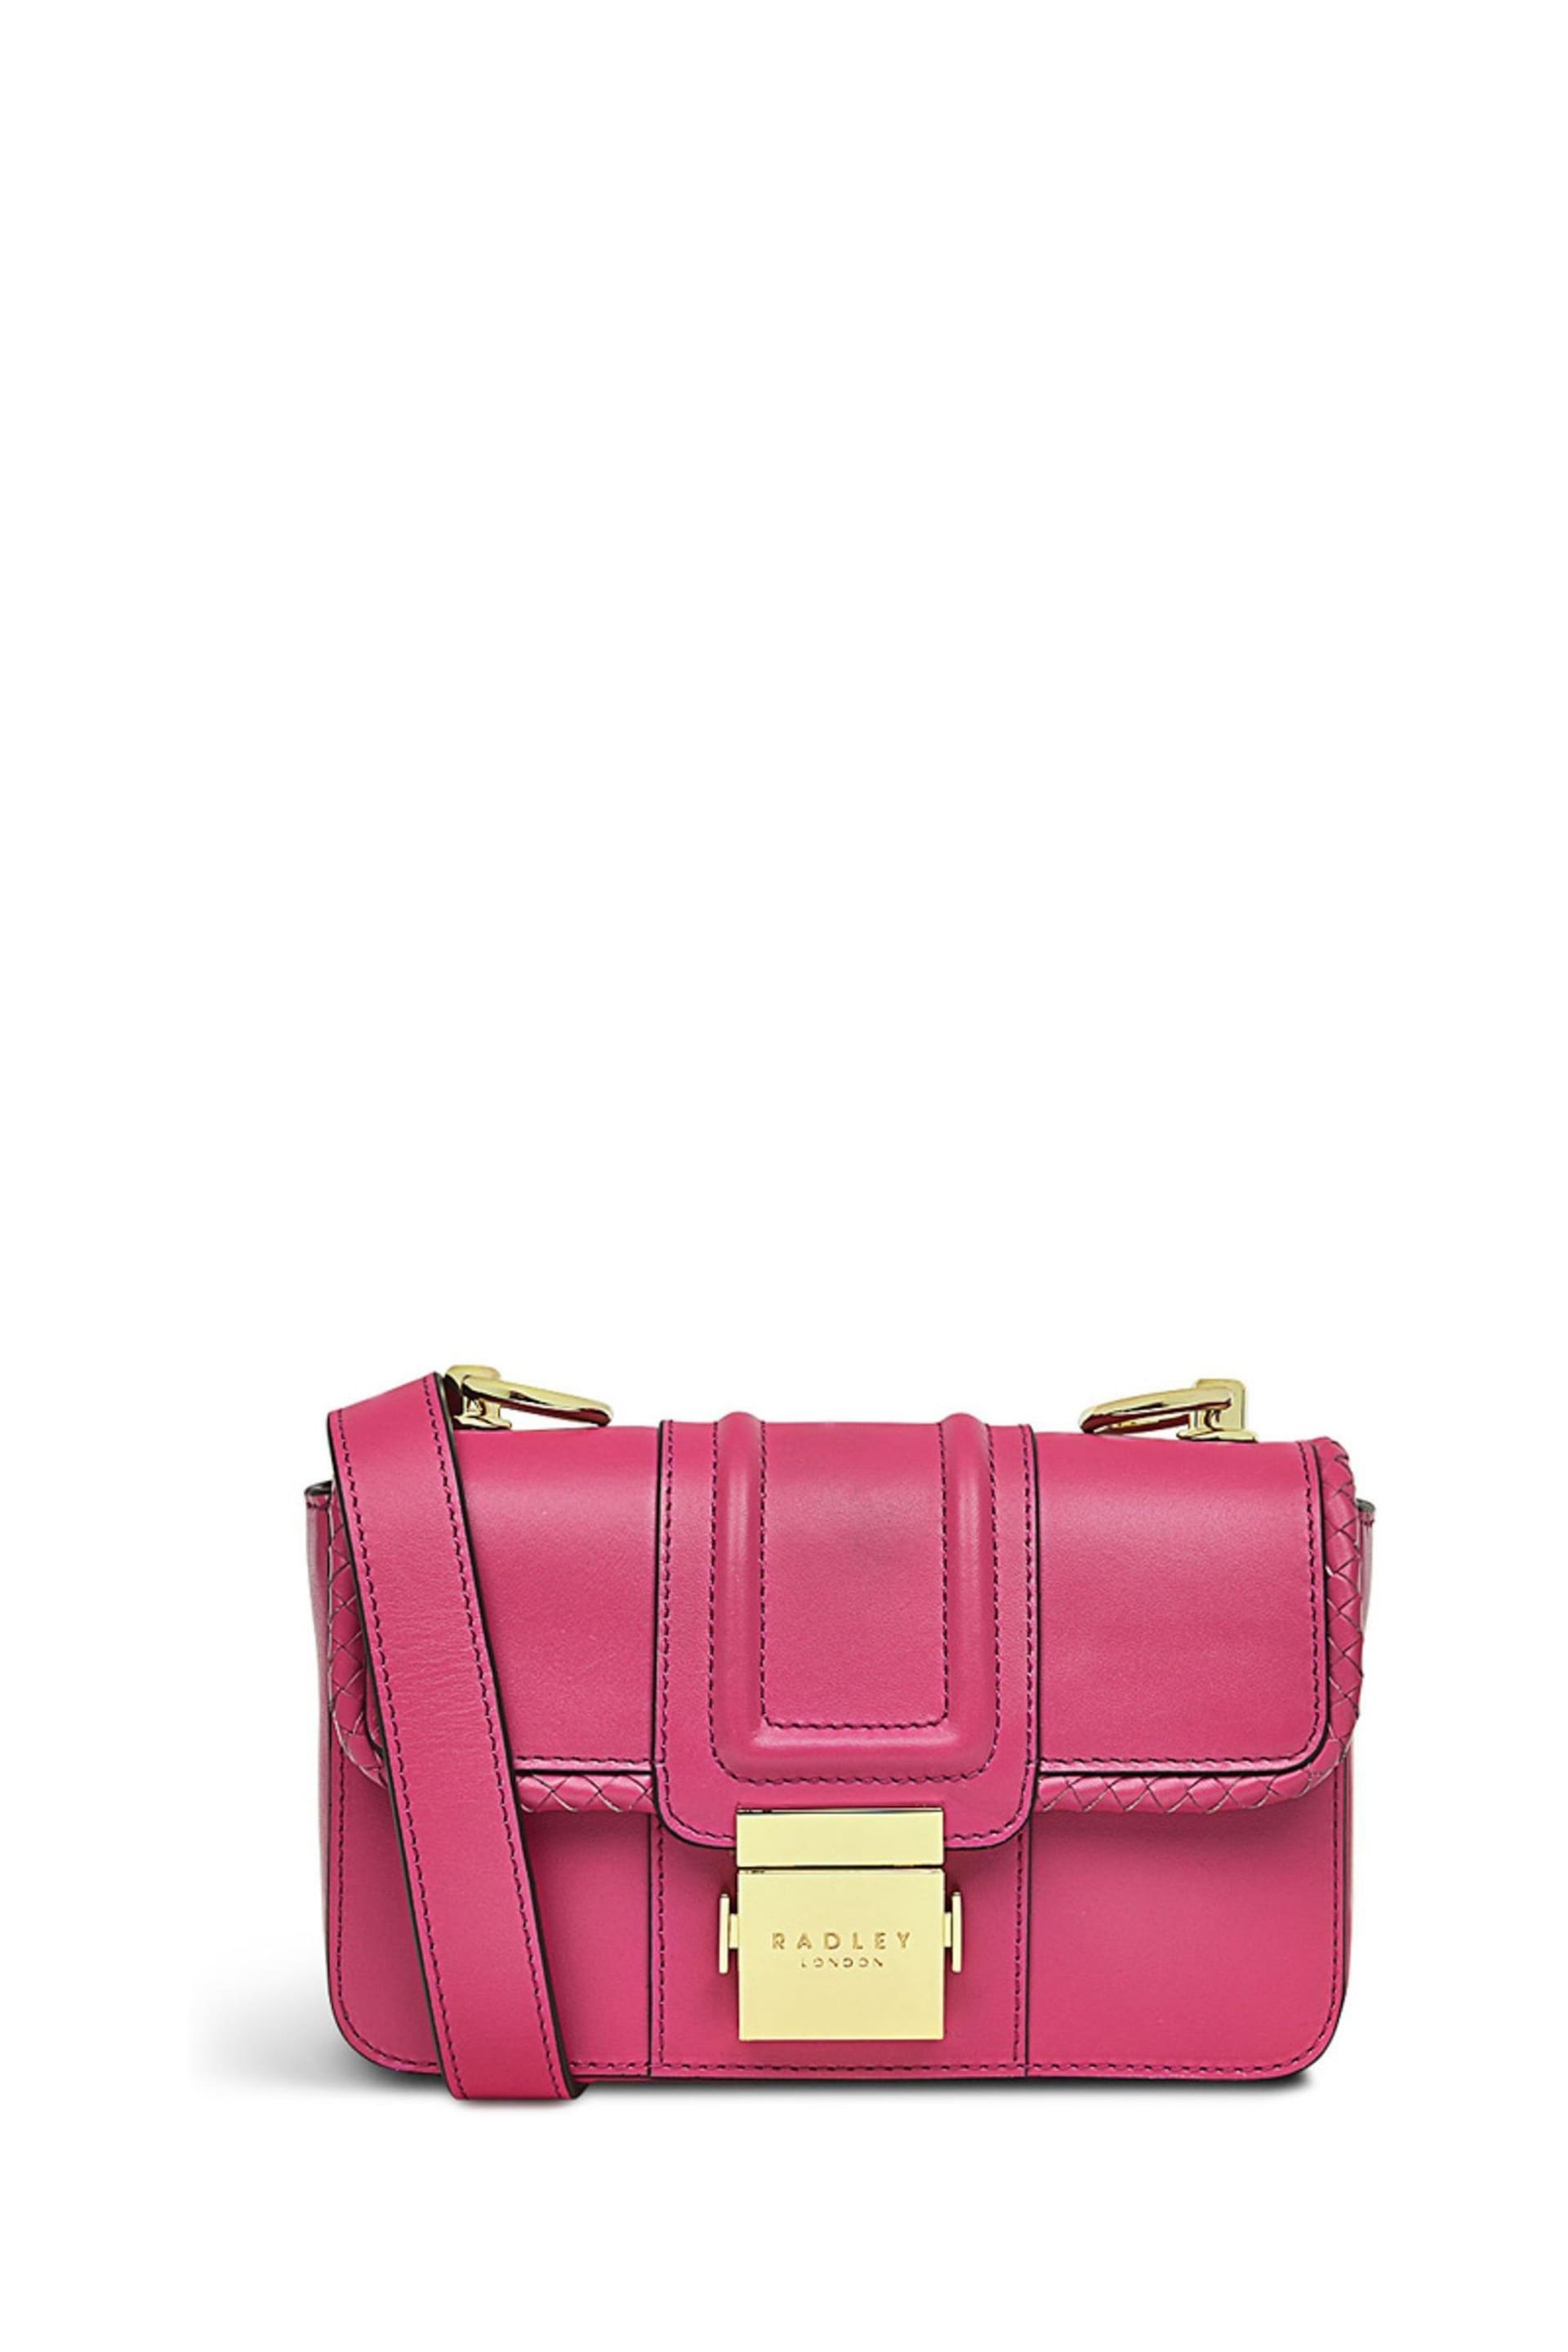 Radley London Pink Hanley Close - Weave Mini Flapover Crossbody Bag - Image 1 of 4